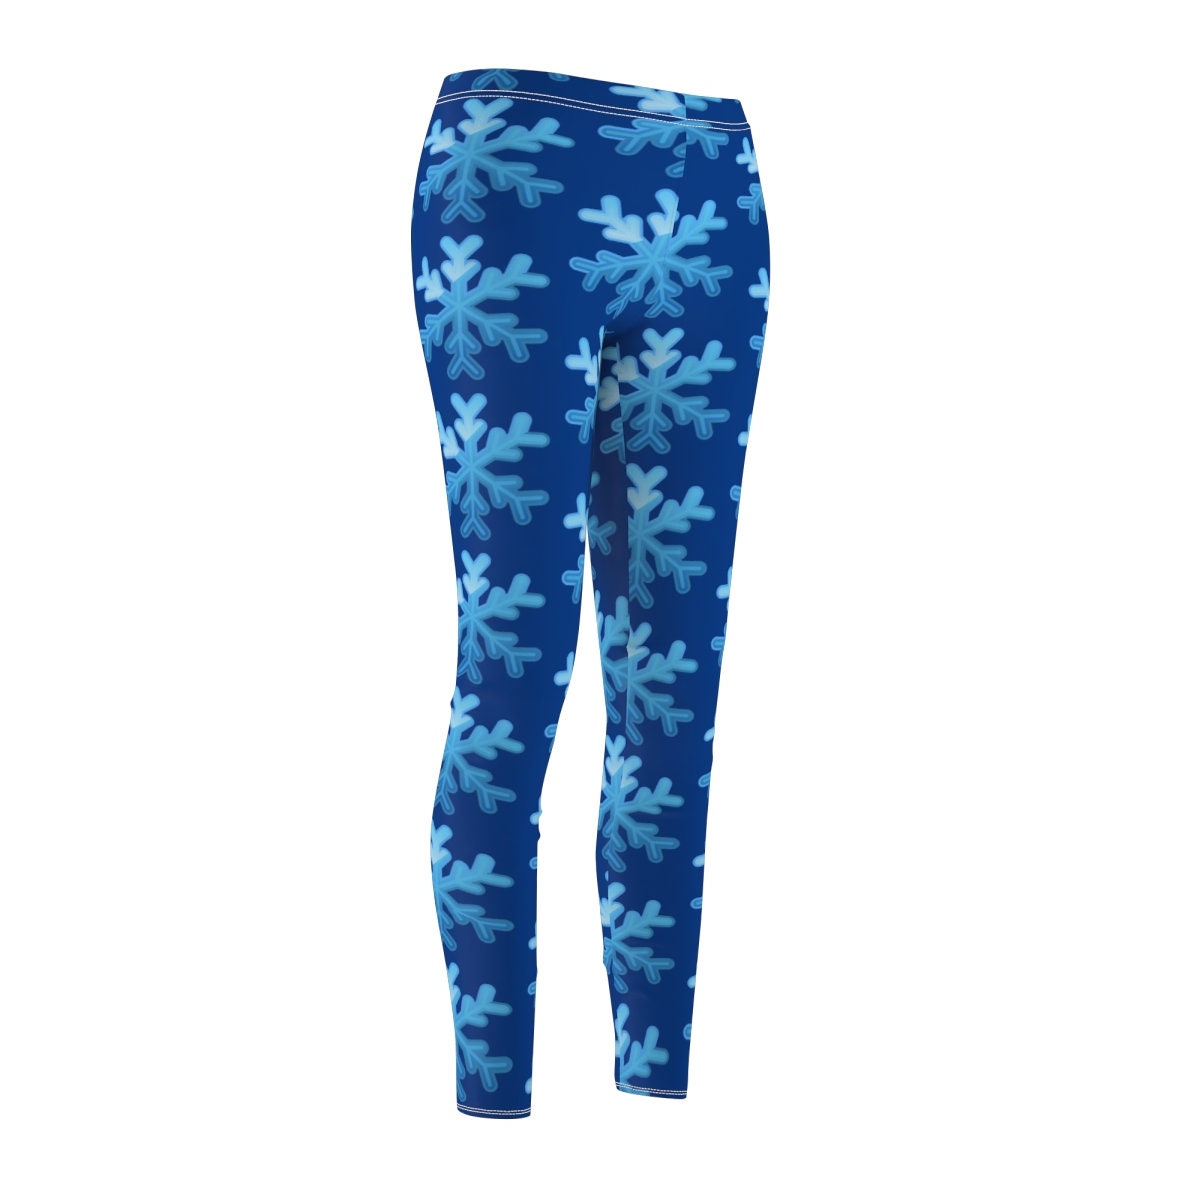 Leggings for Women - Snowflake Leggings, Blue Custom Printed Design sold by  Warren Retail, SKU 40073515